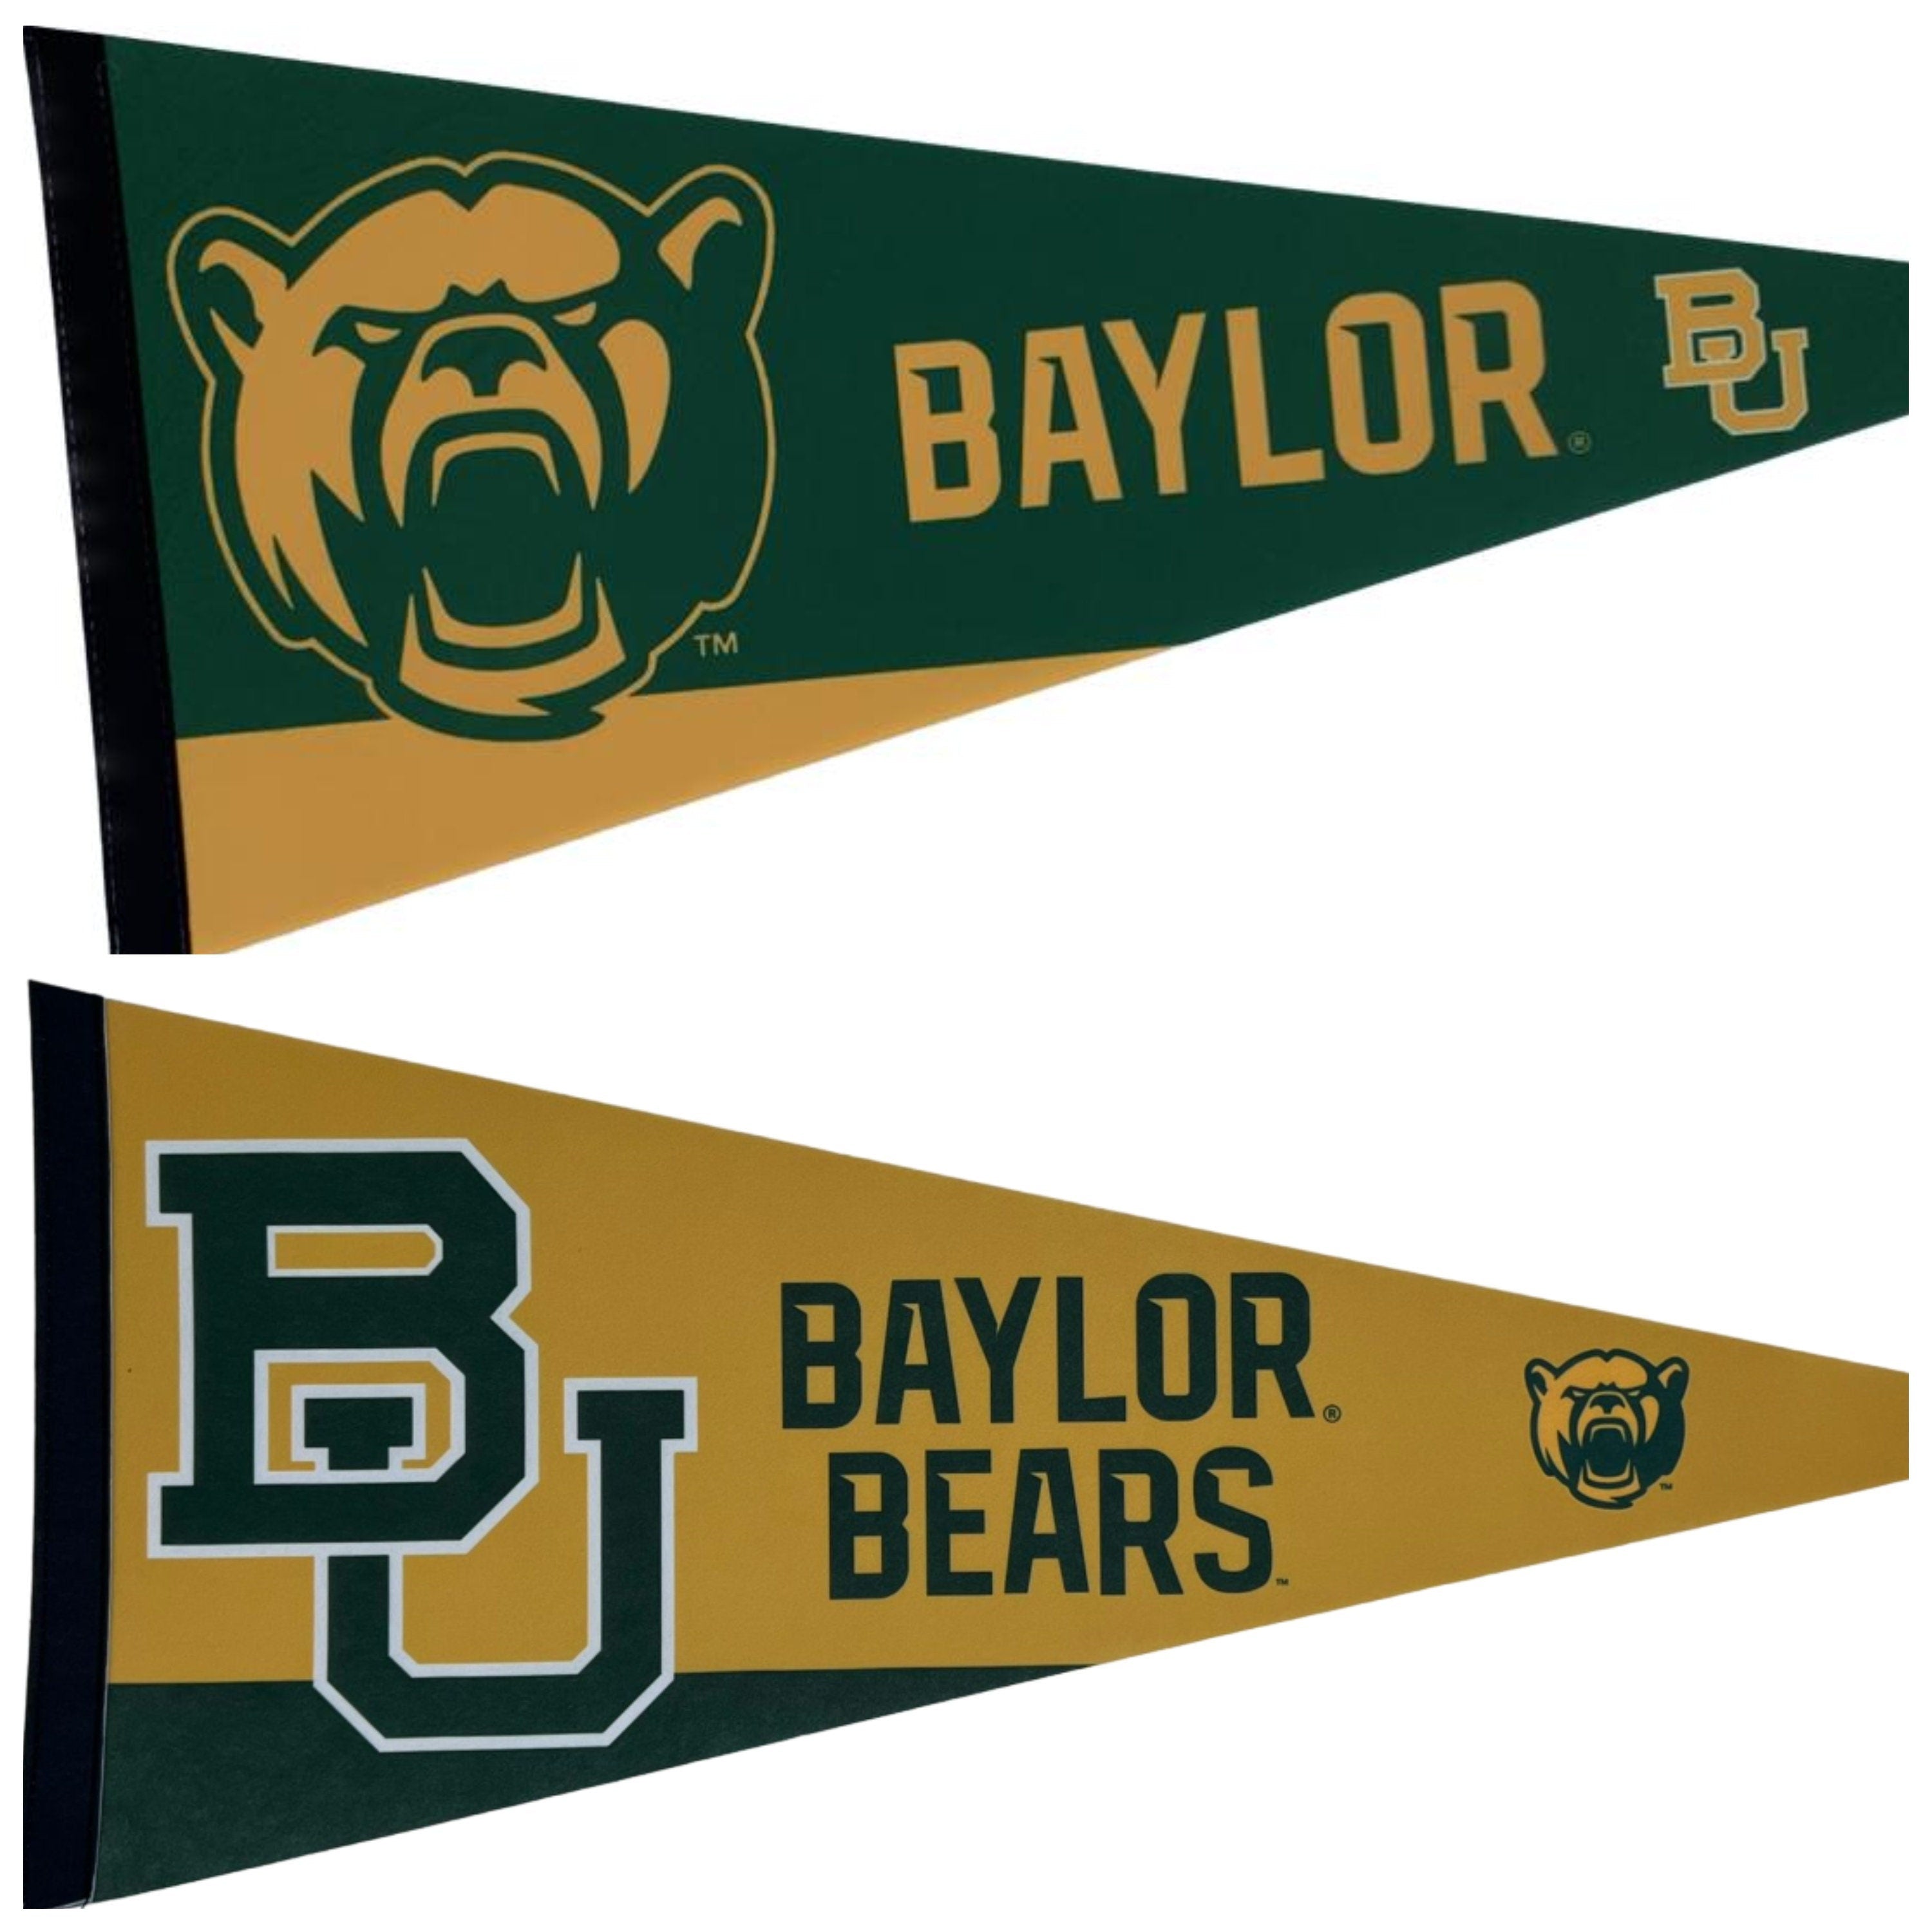 Baylor Bears Baylor Uni NCAA american football wimpels vaantje vlaggetje vlag fanion wimpel vlag fahne drapeau baylor cadeau texas - BU Logo